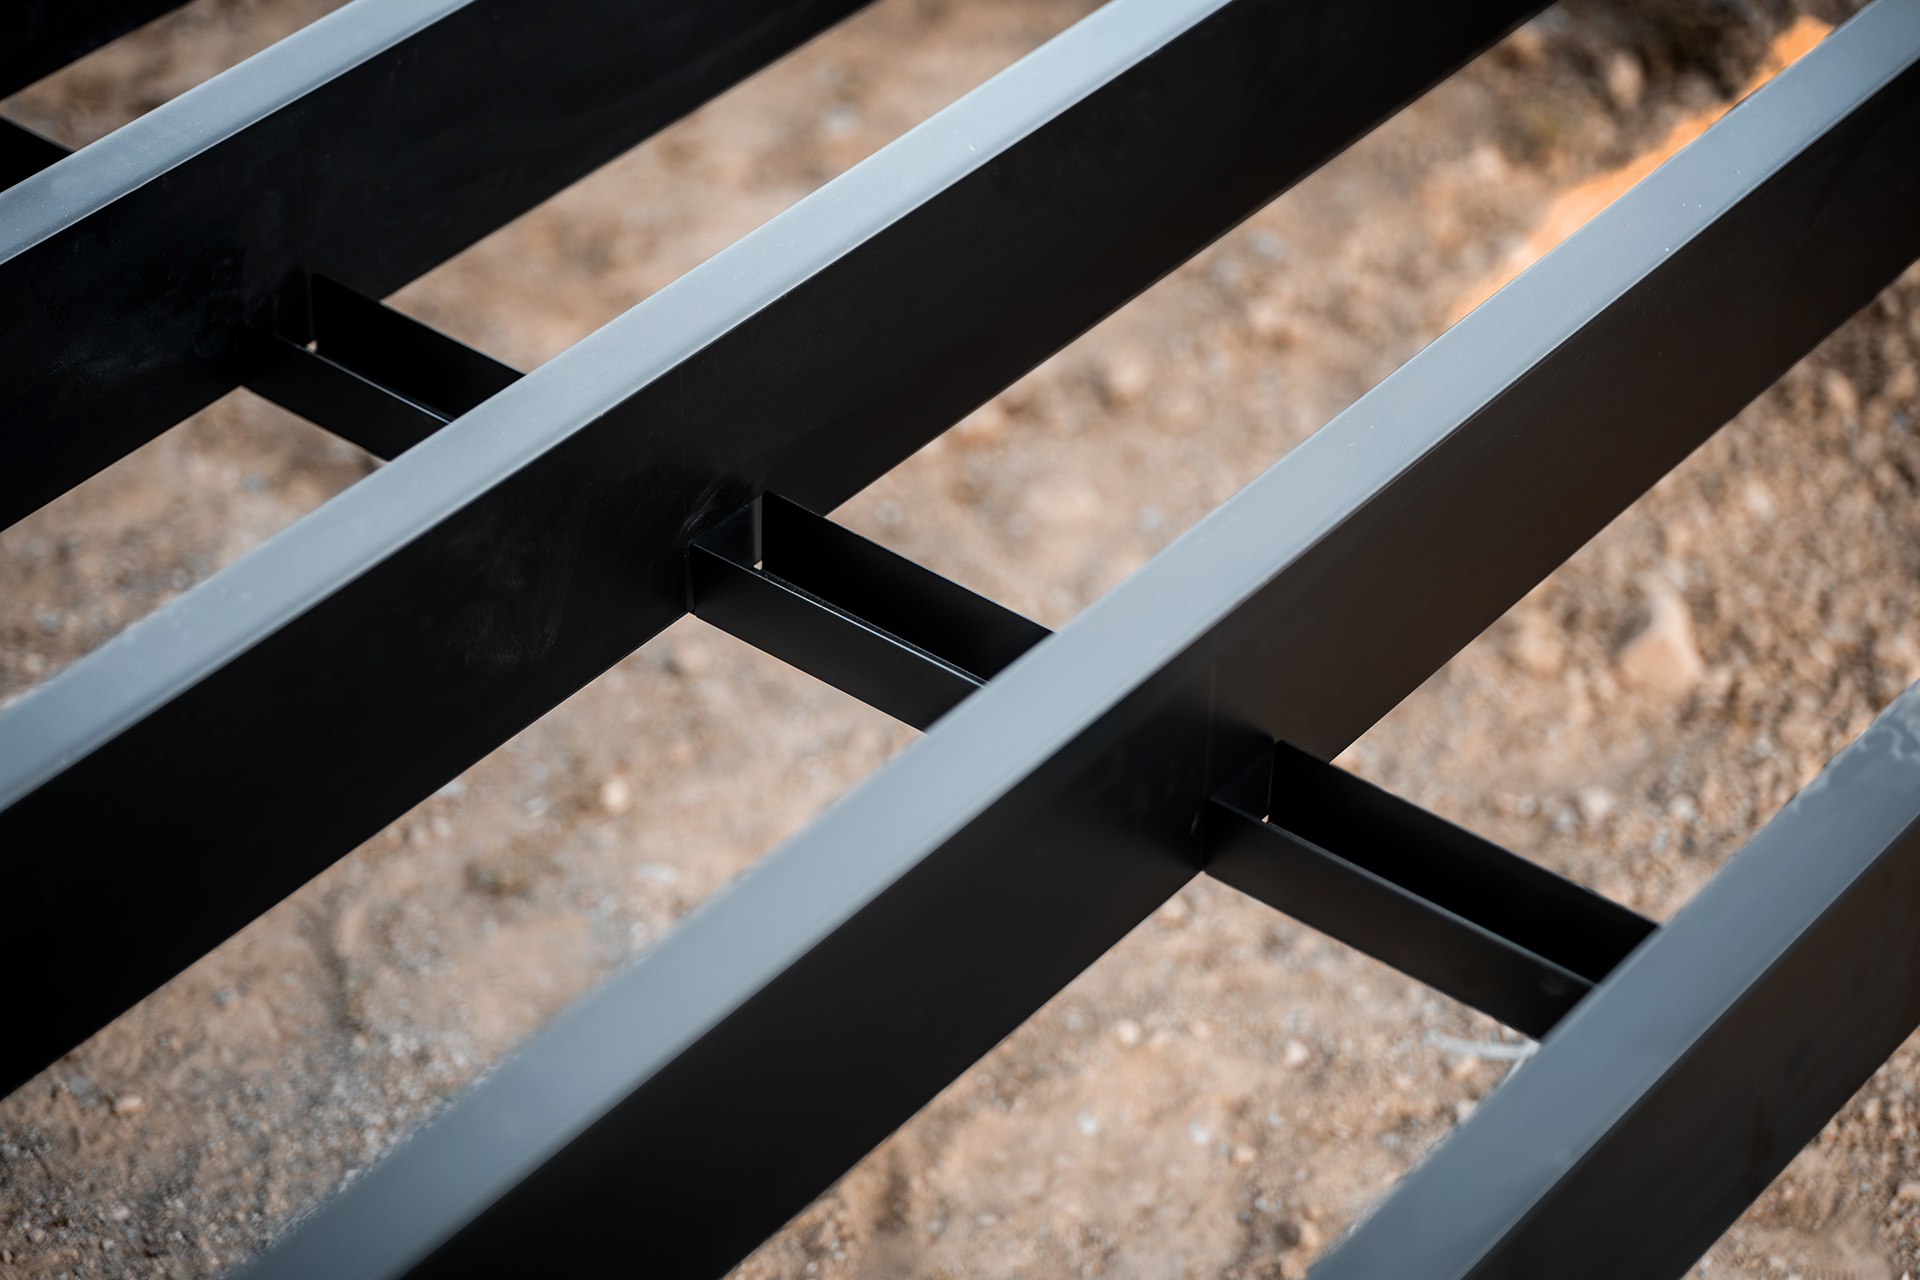 Close-up image of steel deck framing